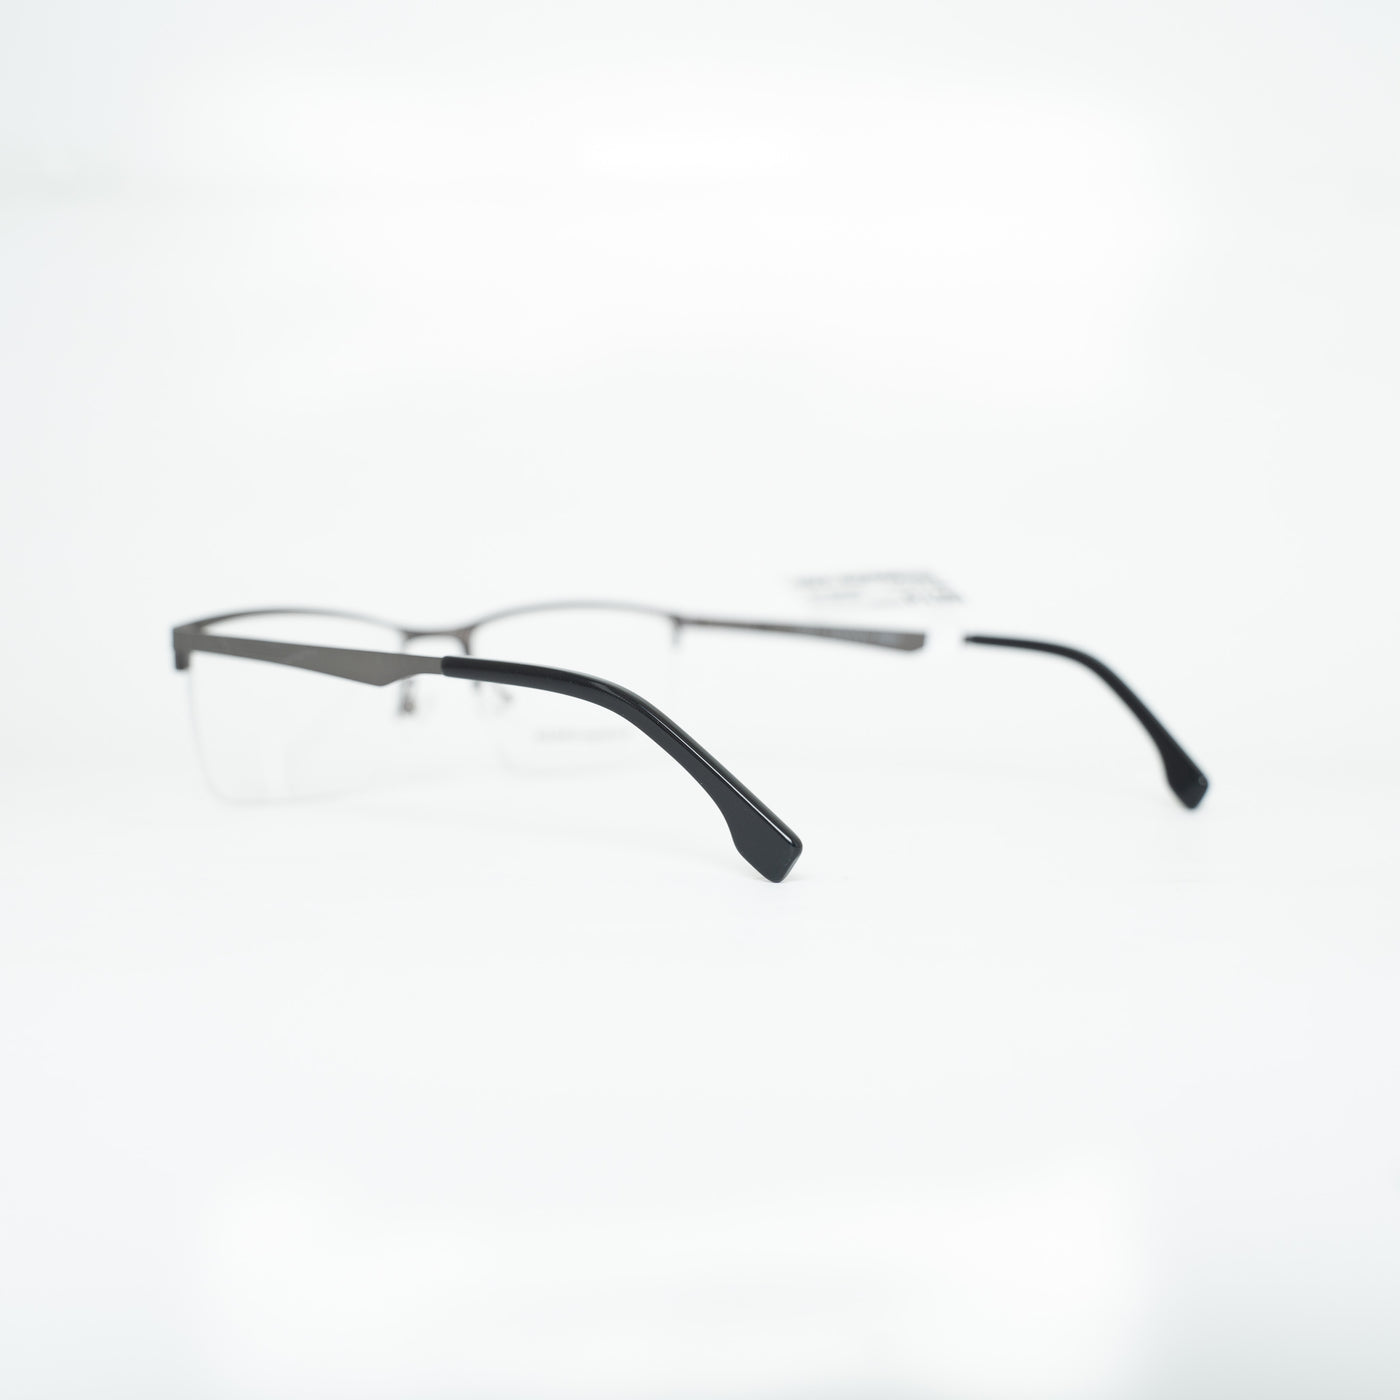 Tony Morgan TM0109BLK55 | Eyeglasses - Vision Express Optical Philippines